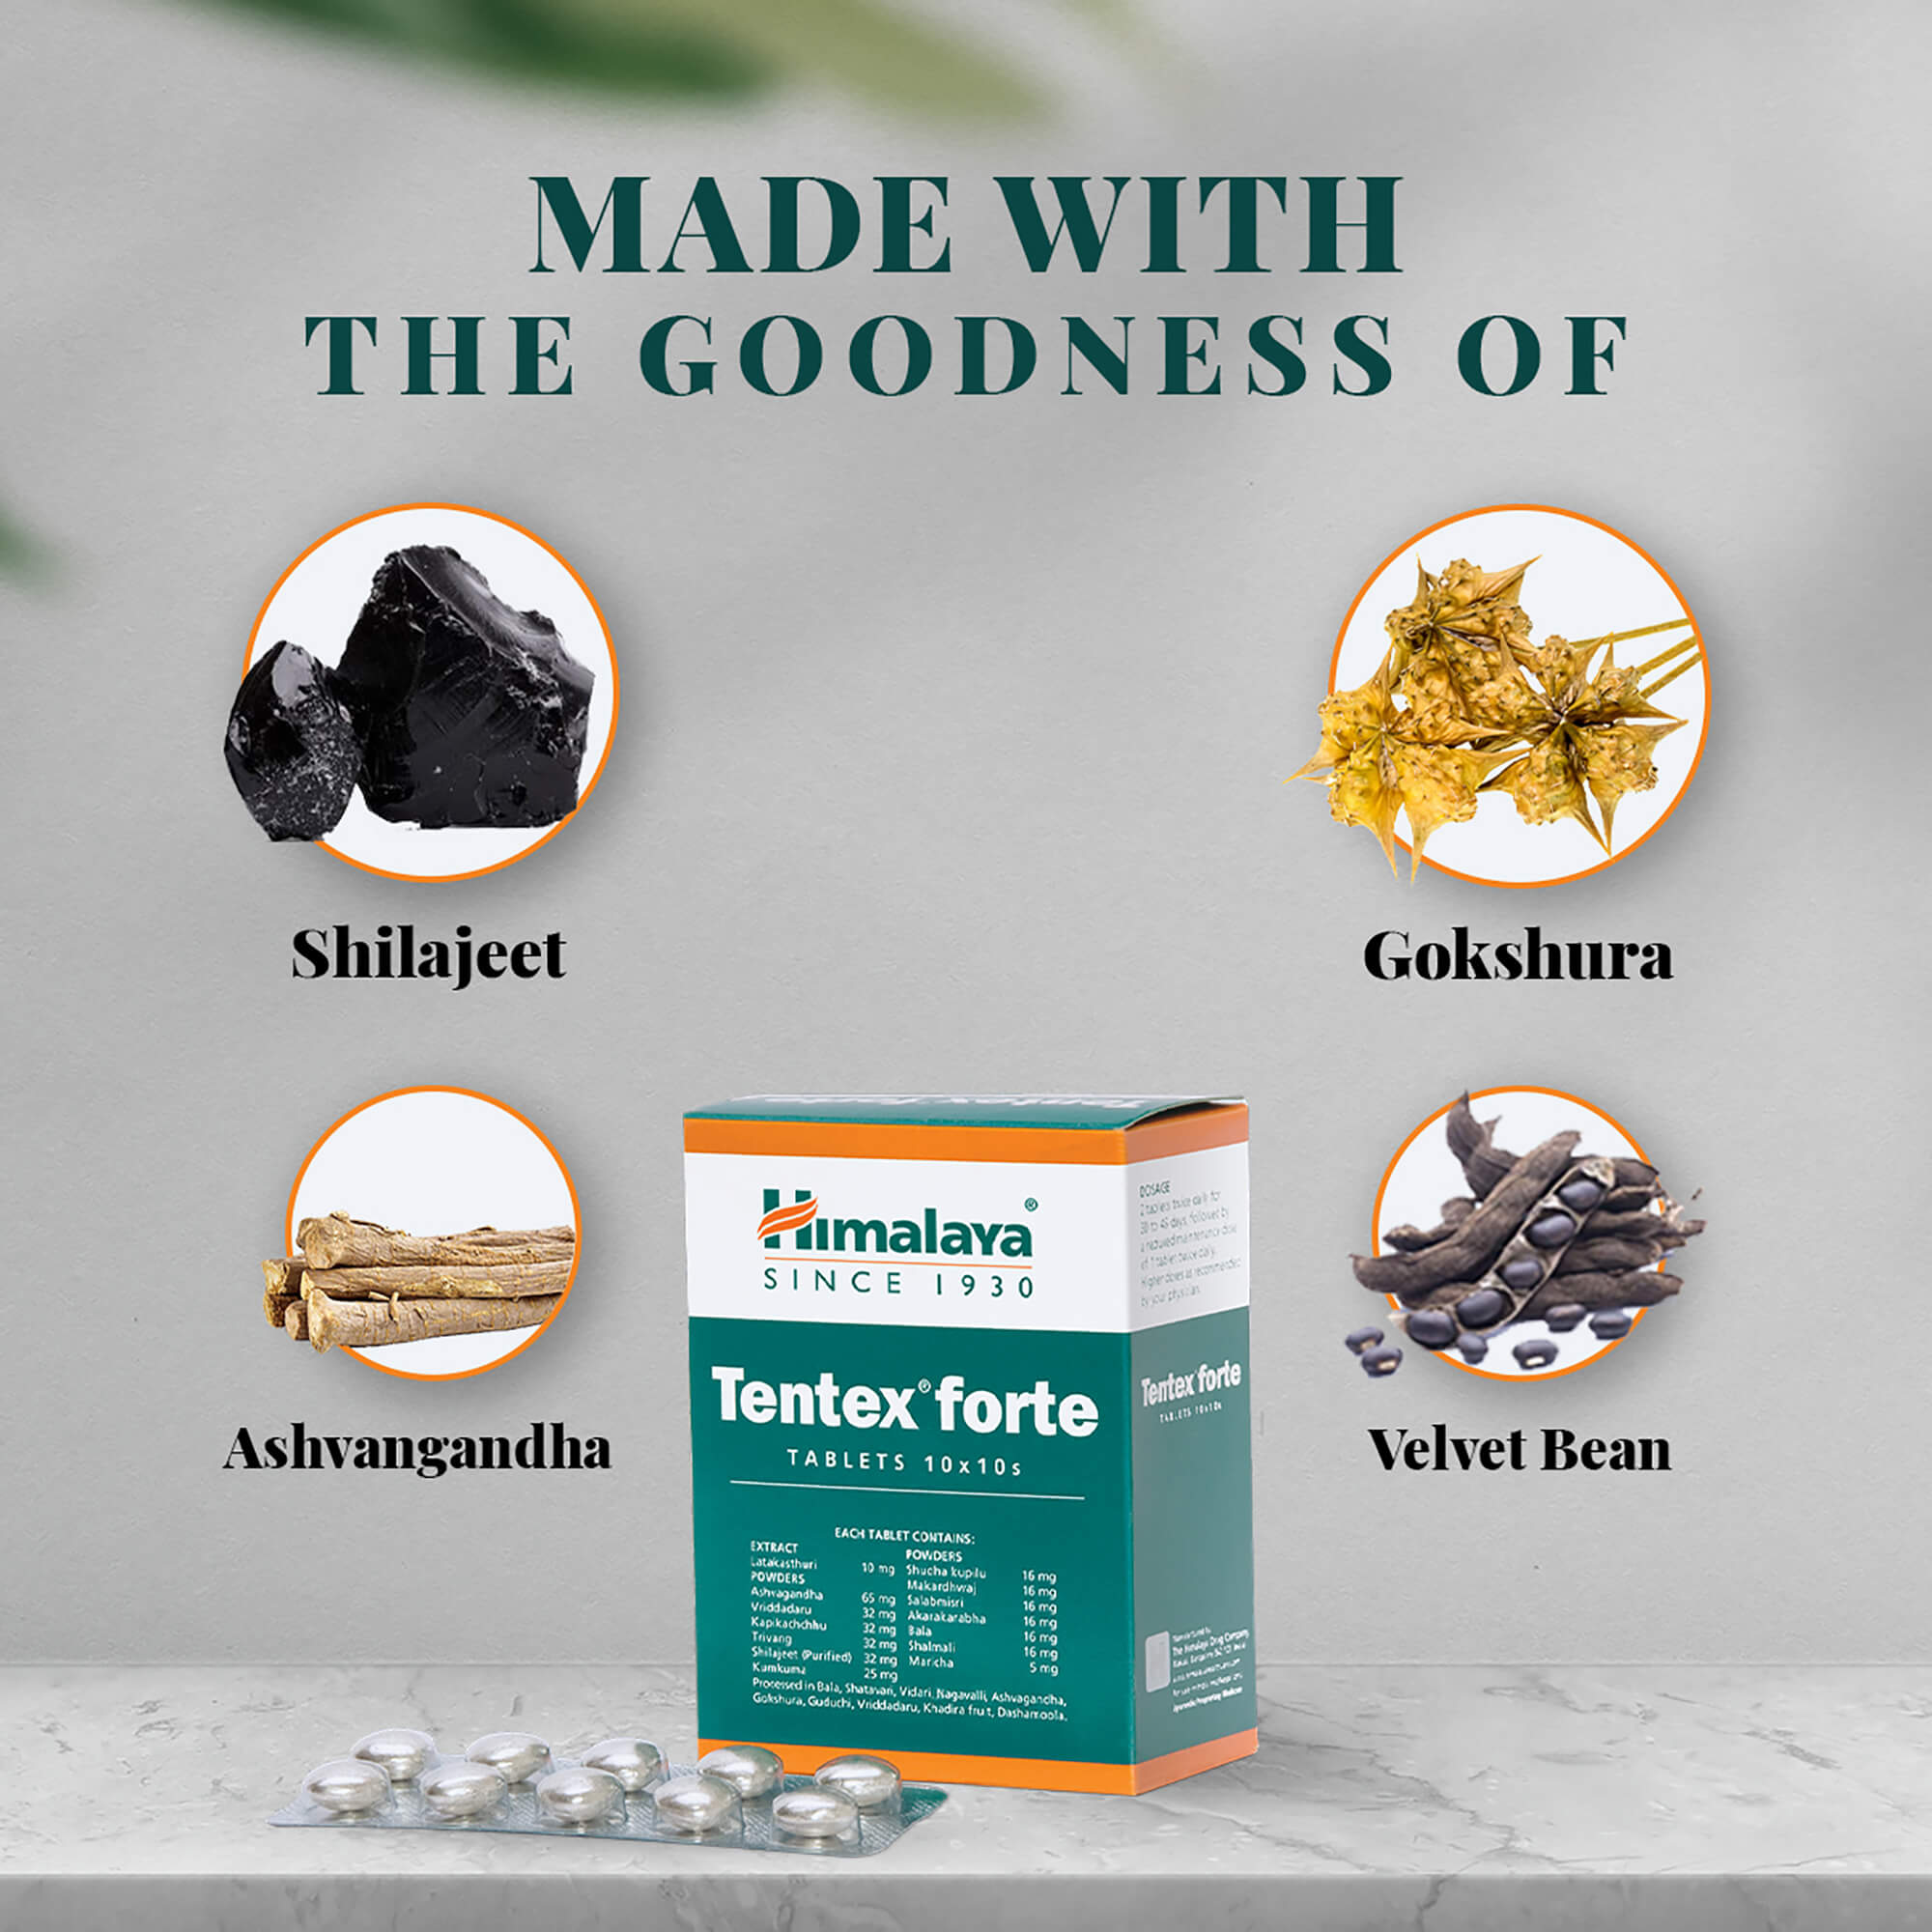 Himalaya Tentex Forte Tablets Ingredients - Shilajeet, Gokshura, Ashvagandha, and Velvet Bean